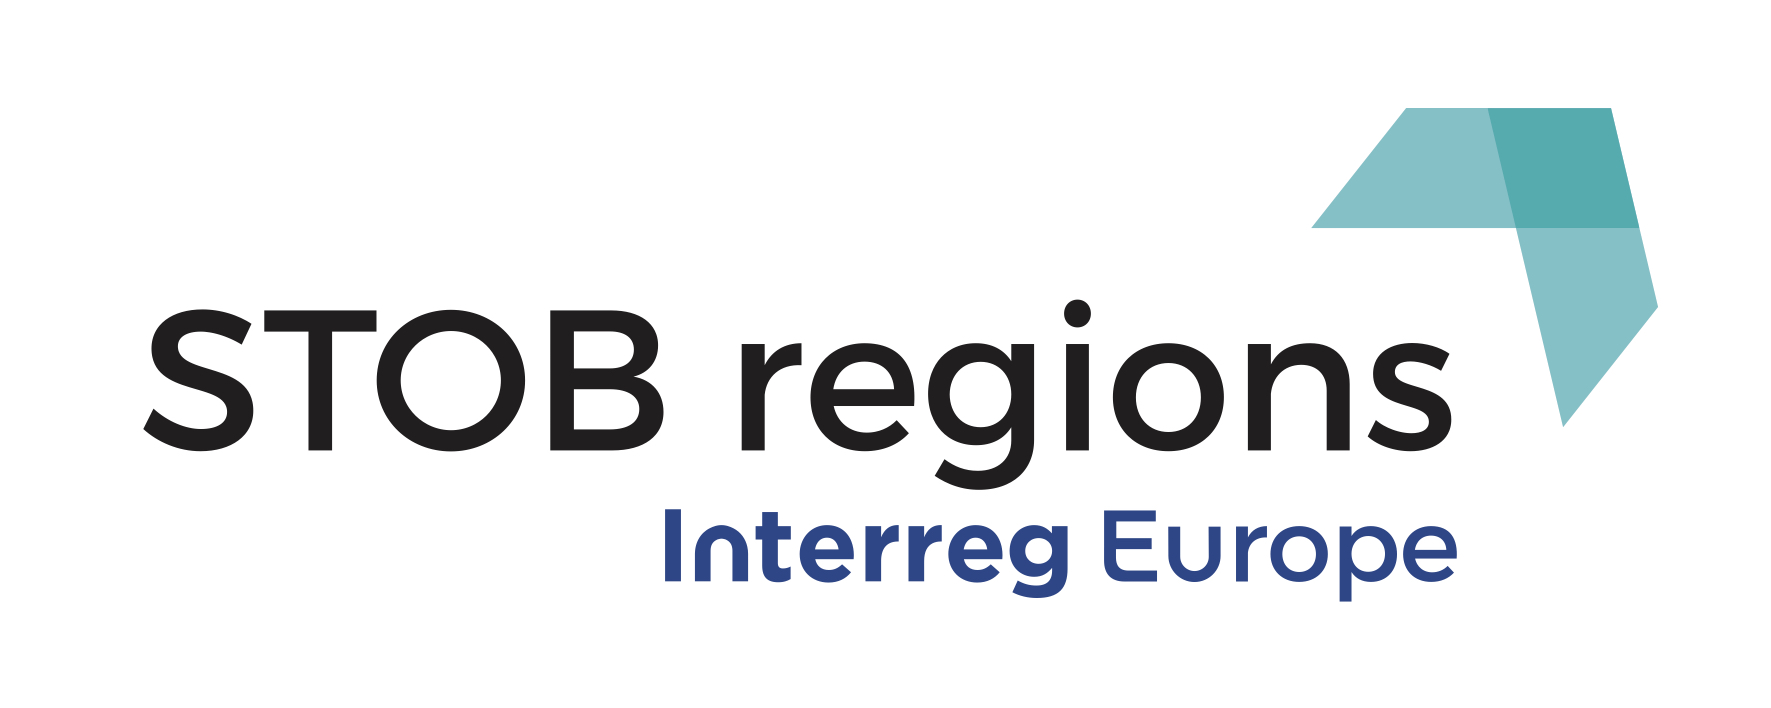 Logo projektu STOB regions